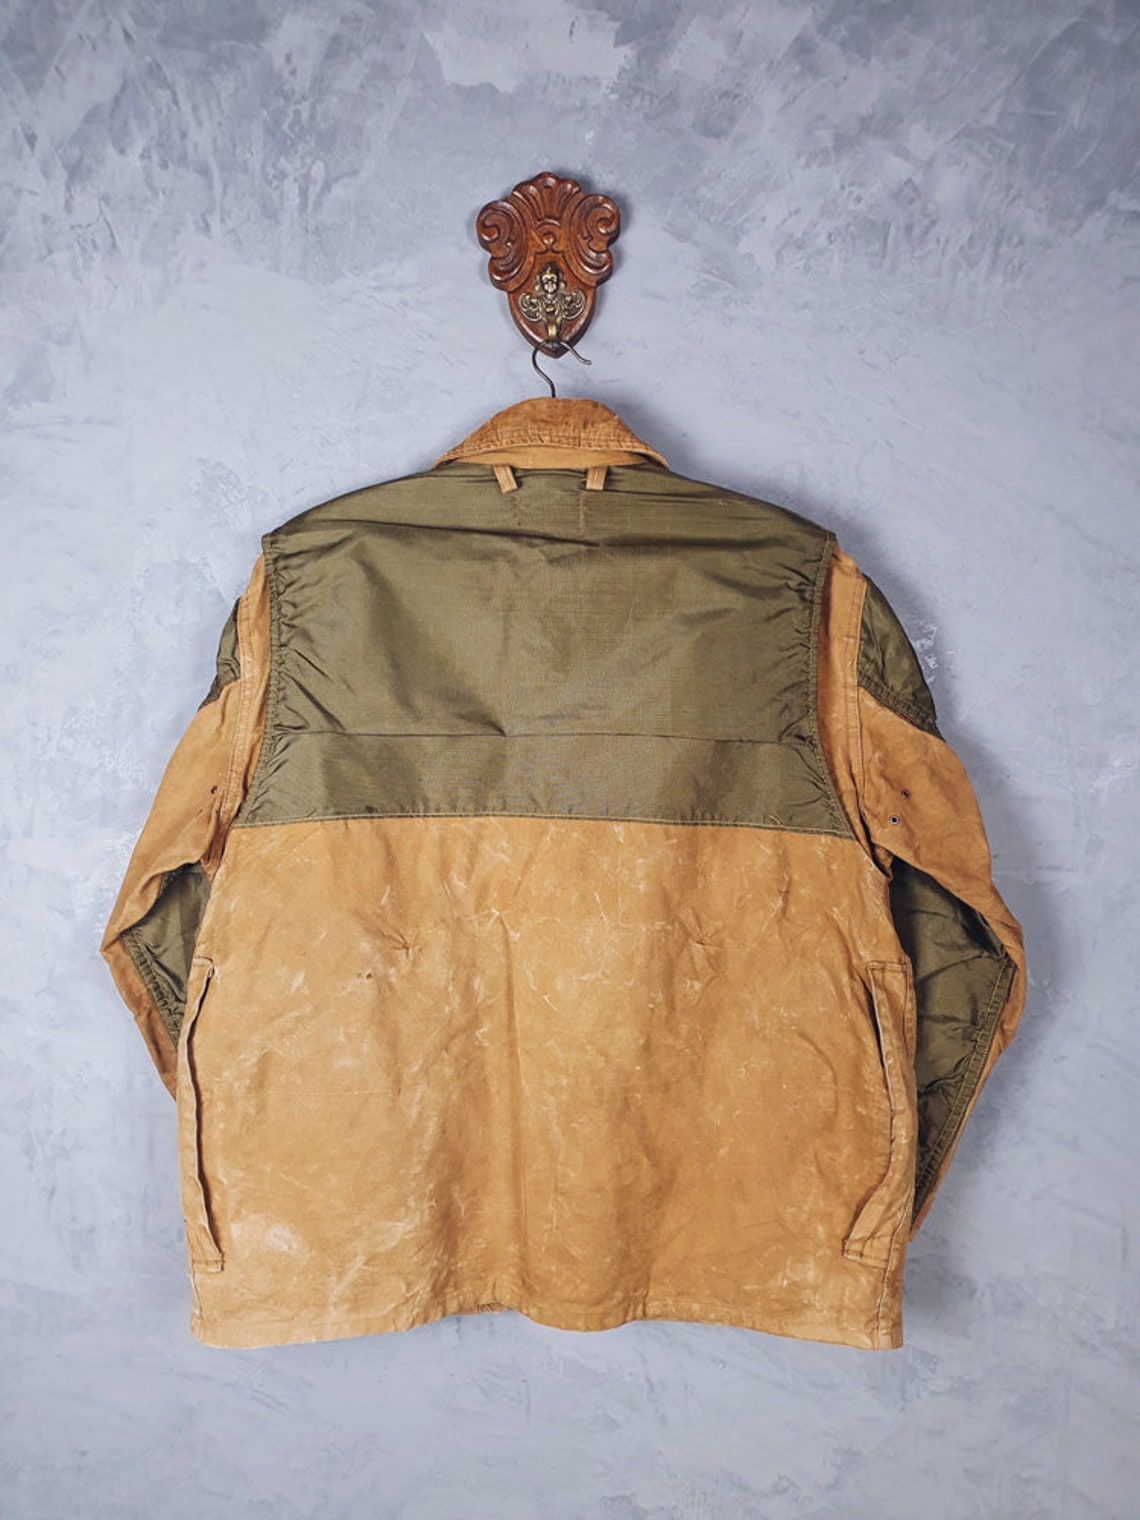 Saf-T-Bak hunting jacket /SafTBak 80s | Etsy